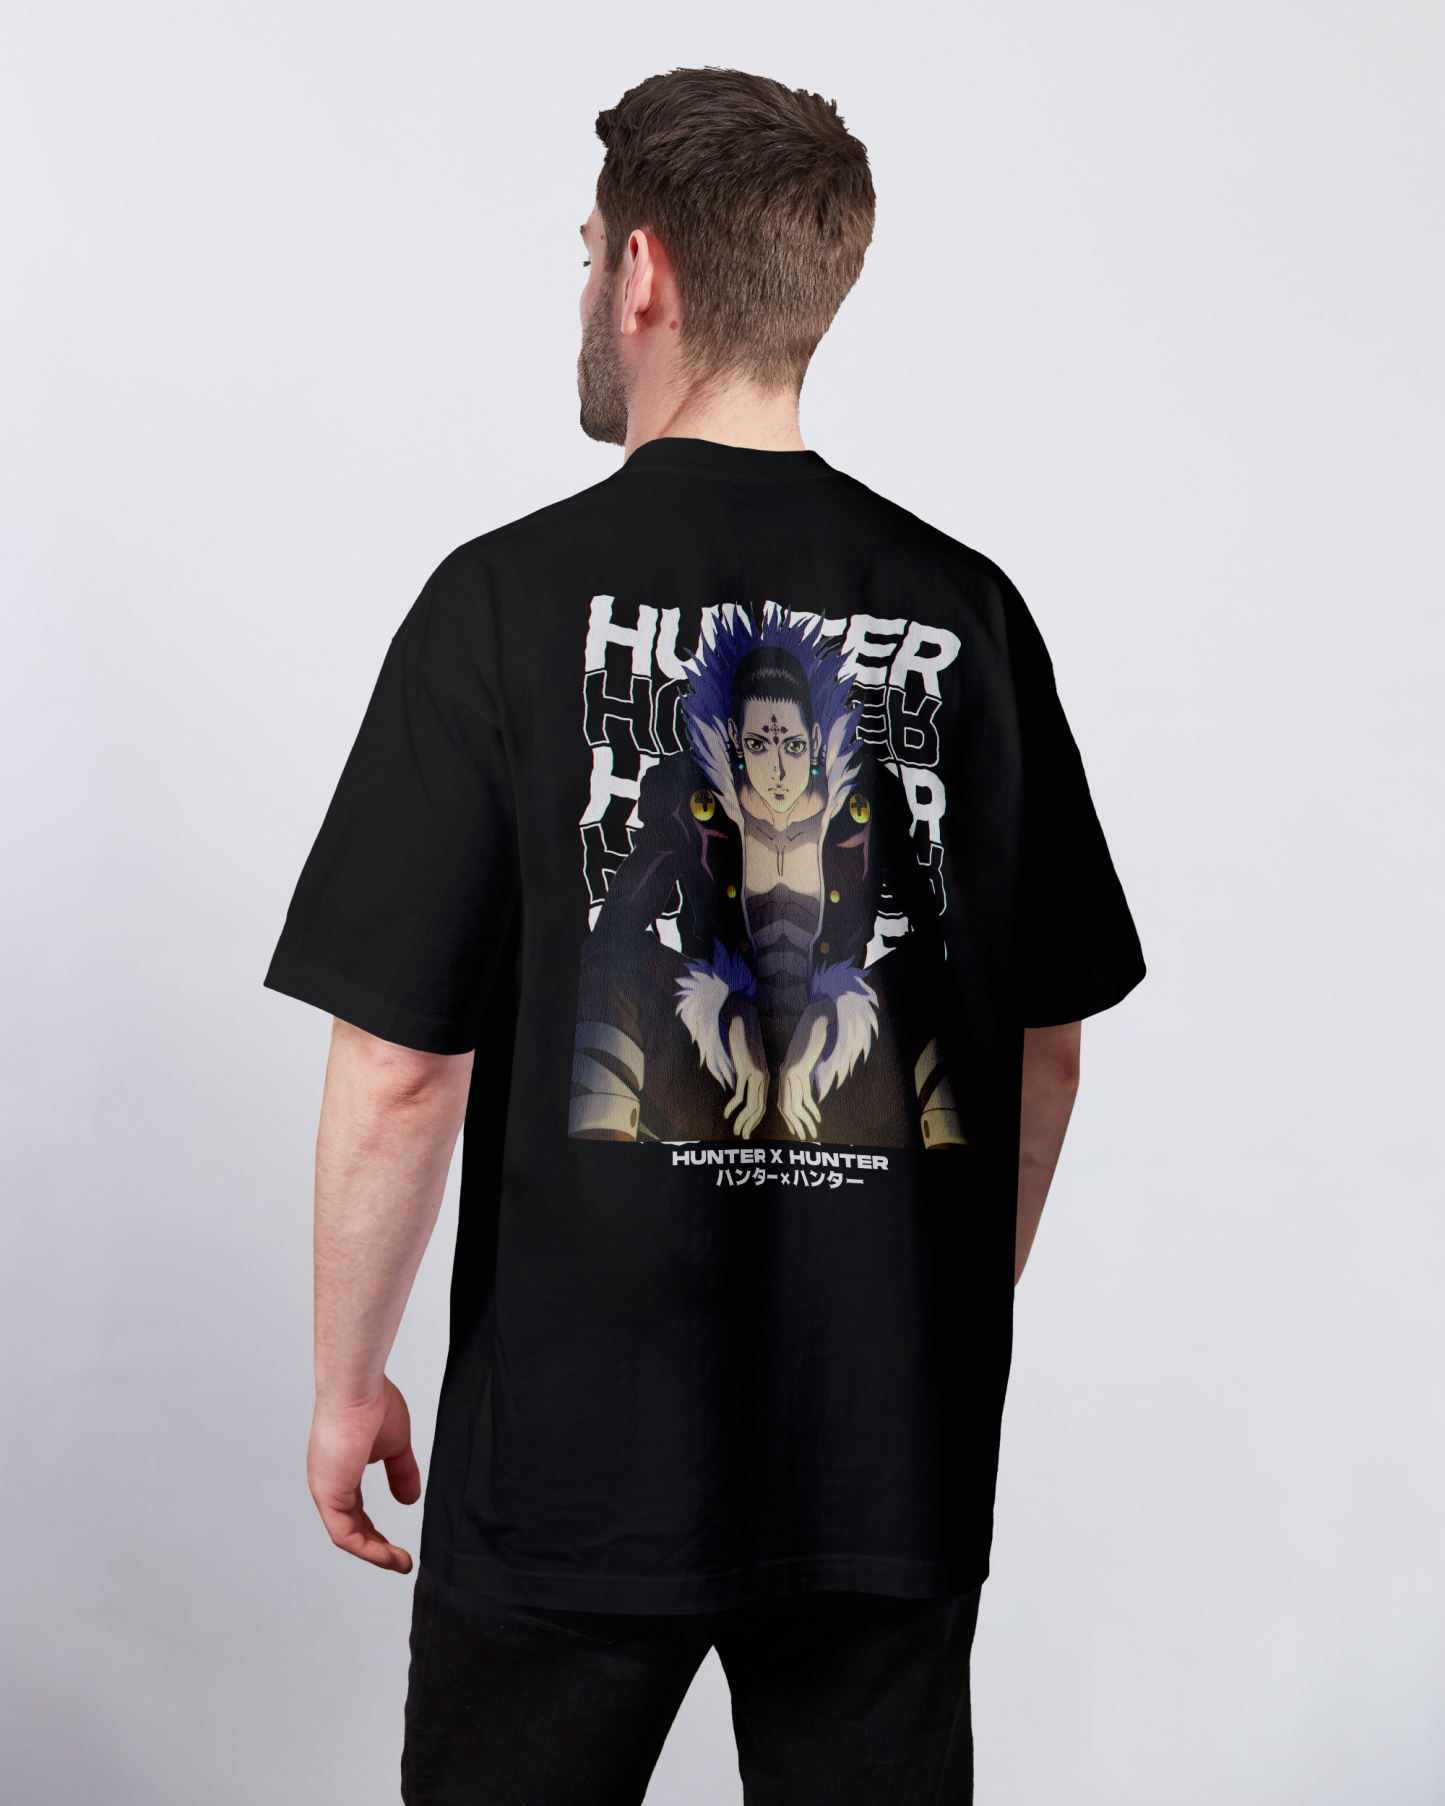 Chrollo Lucilfer Hunter x Hunter | T-Shirt